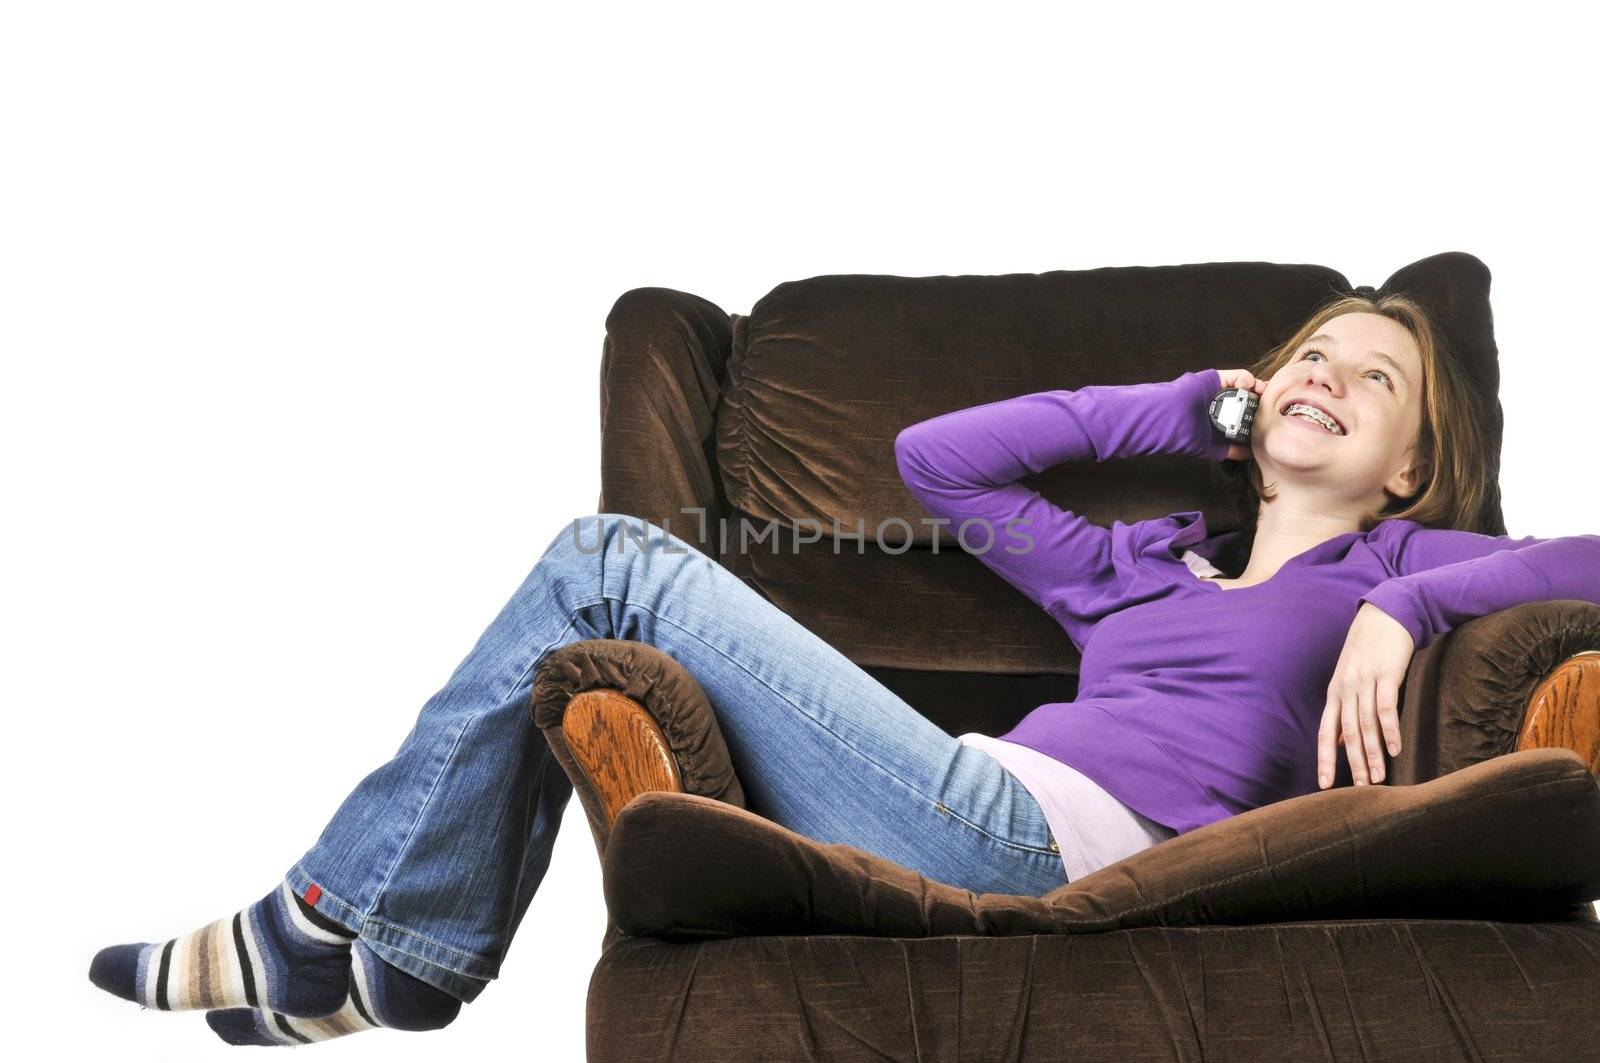 Teenage girl talking on a phone sitting in an armchair